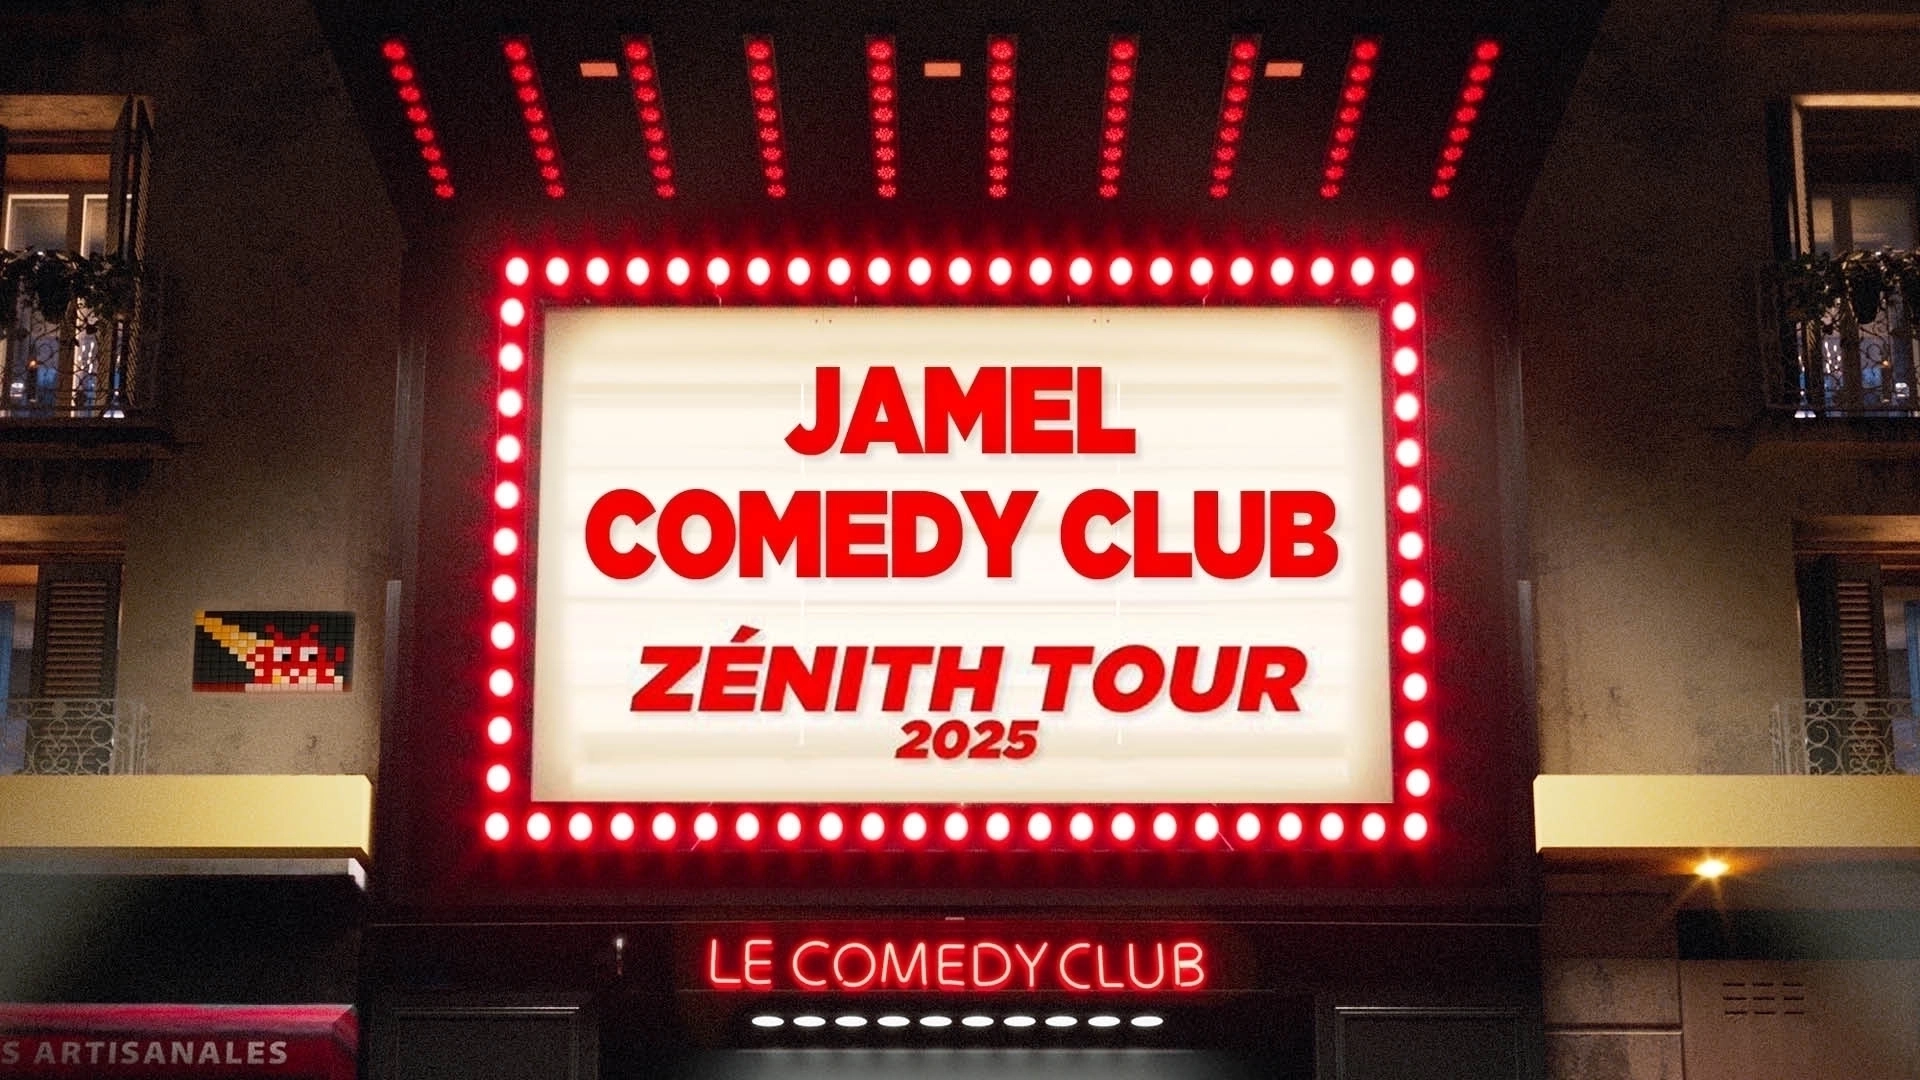 Jamel Comedy Club Zenith Tour 2025 at Zenith Dijon Tickets